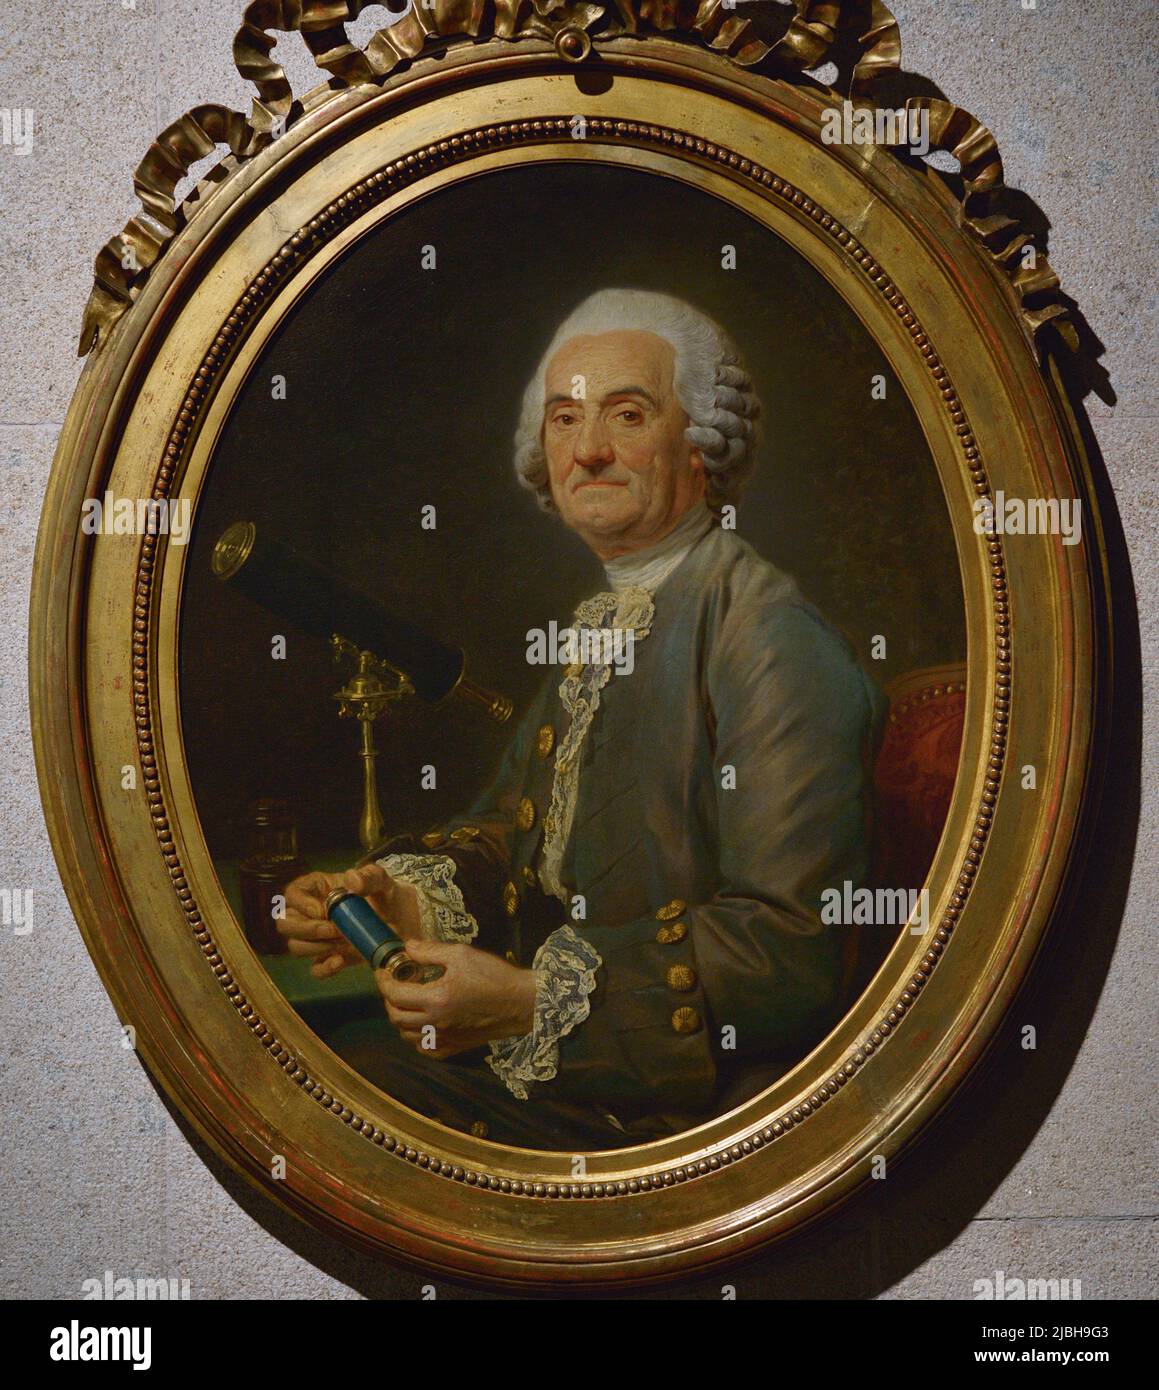 Nicolas-Bernard Lépicié (1735-1784). French painter. The Astronomer, ca. 1777. Oil on canvas. Calouste Gulbenkian Museum. Lisbon, Portugal. Stock Photo